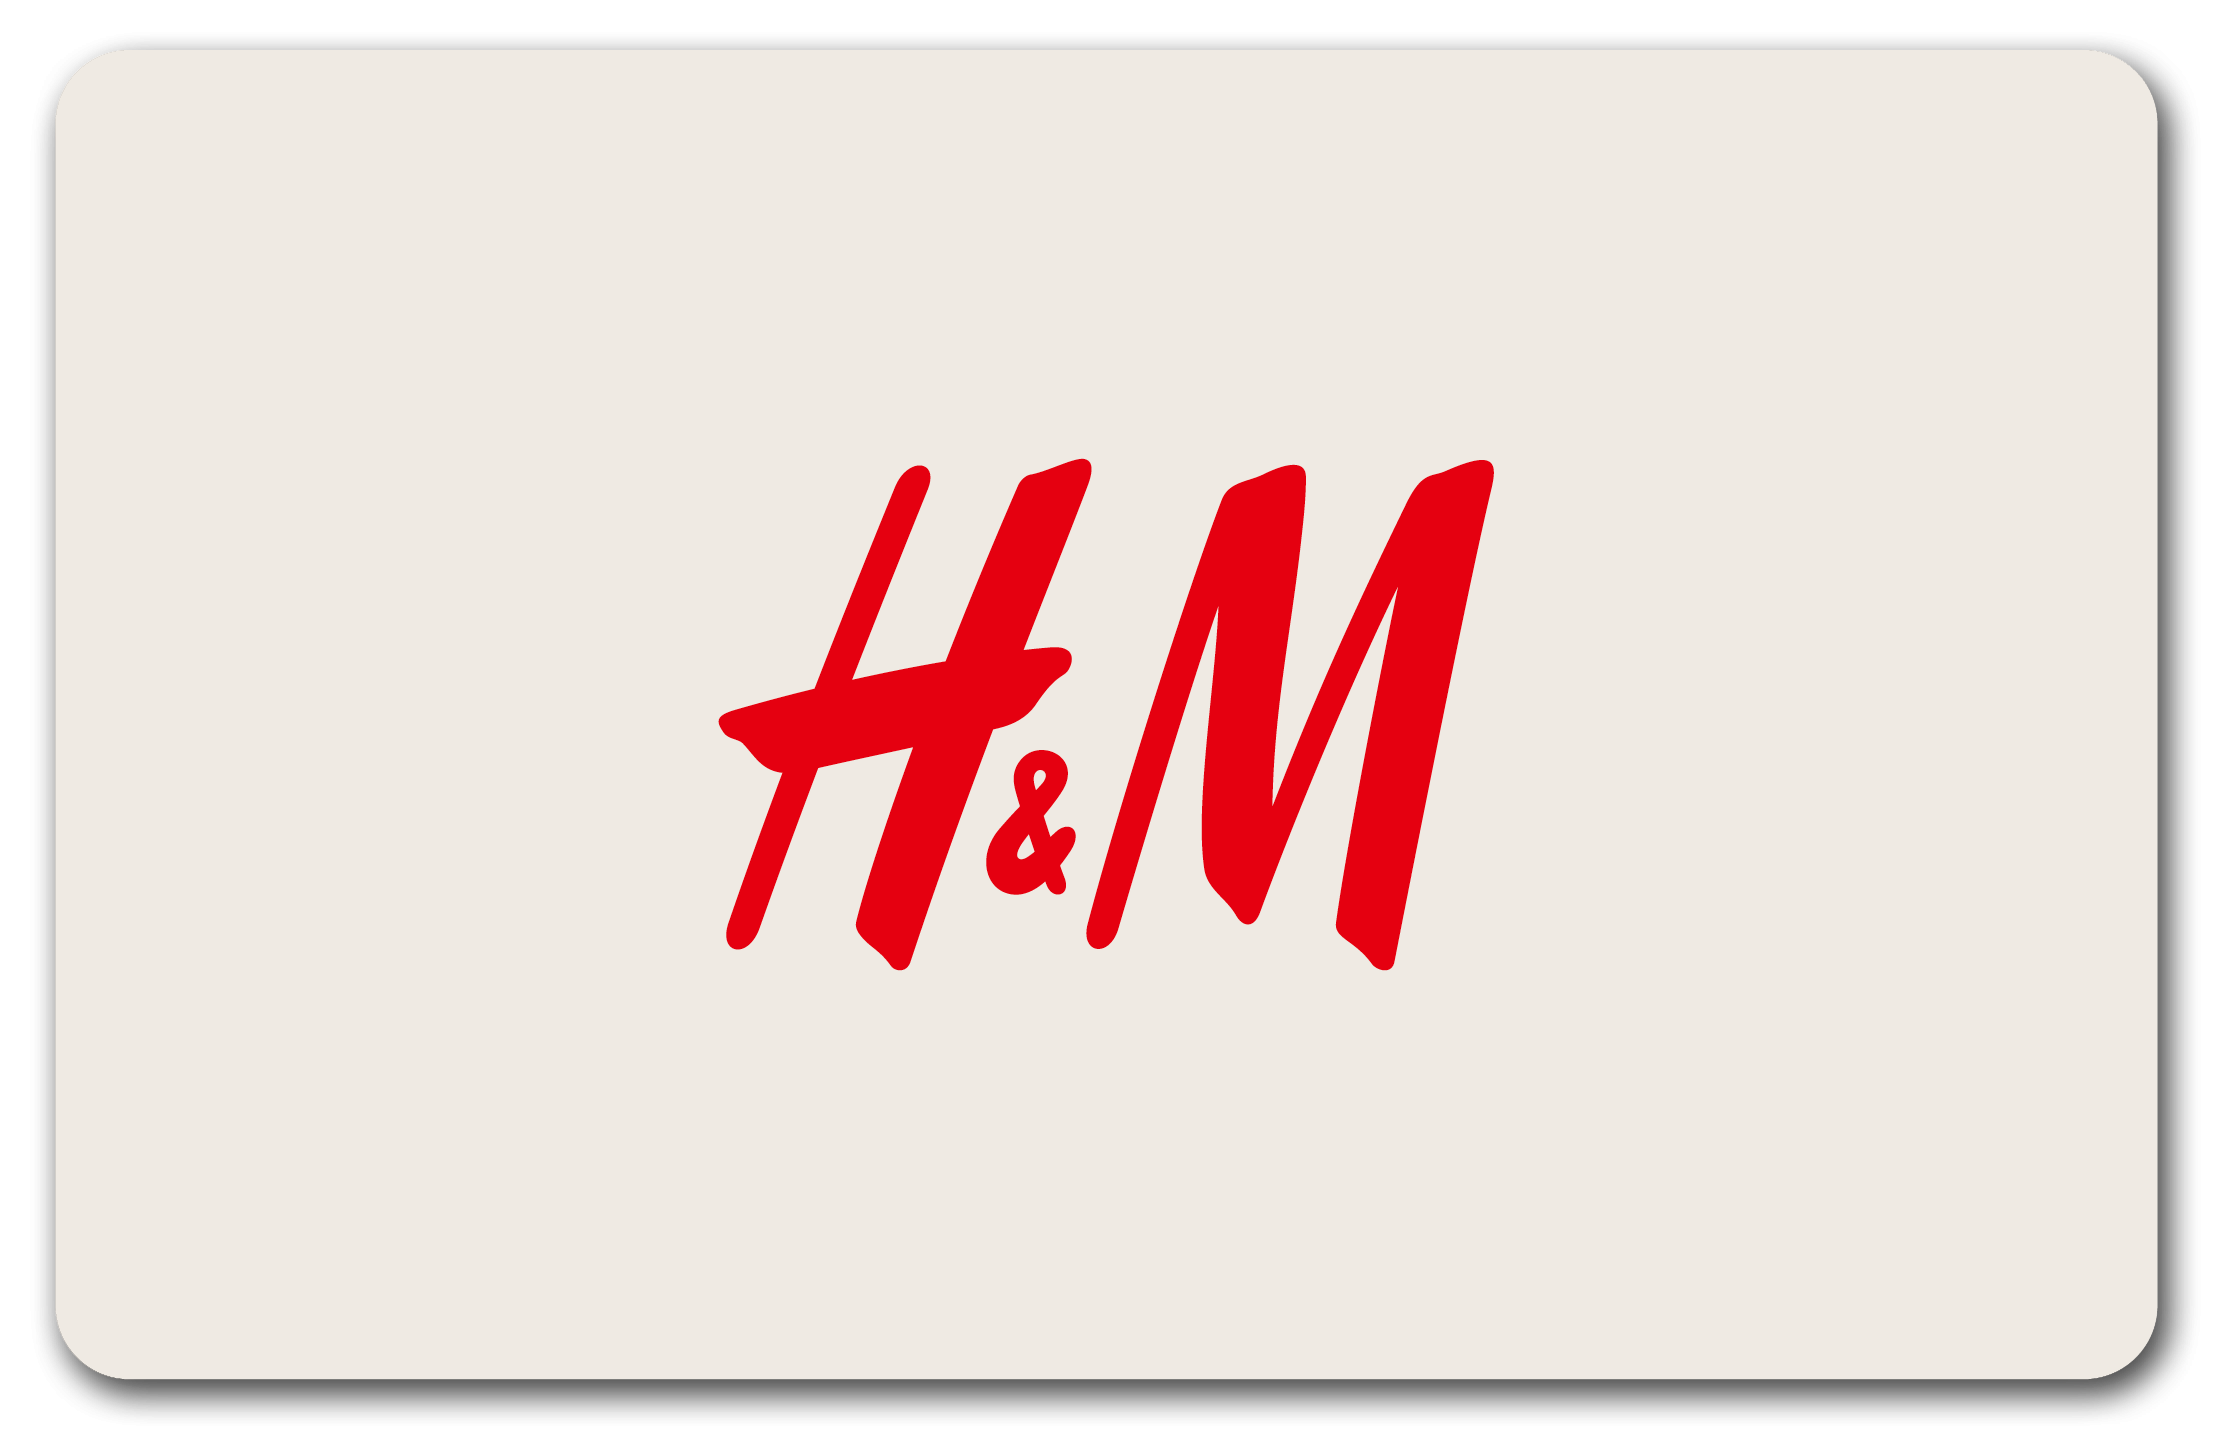 H&M Roissy-en-France